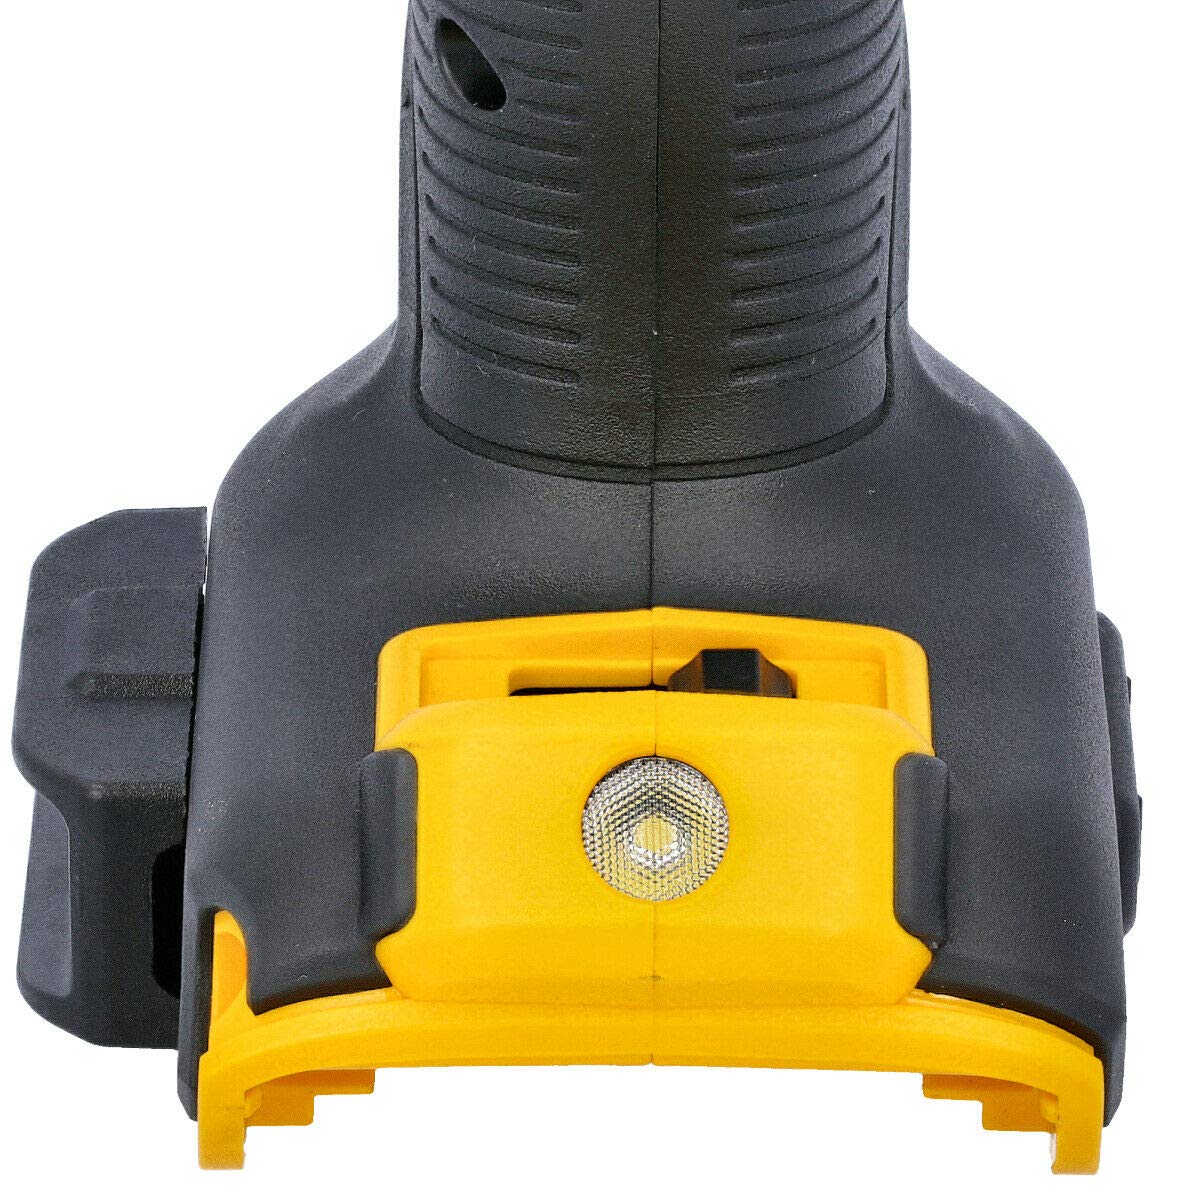 DEWALT DCD796N 18V XR Brushless Compact Combi Drill with 1 x 5.0Ah Battery DCB184, 18 V , Yellow